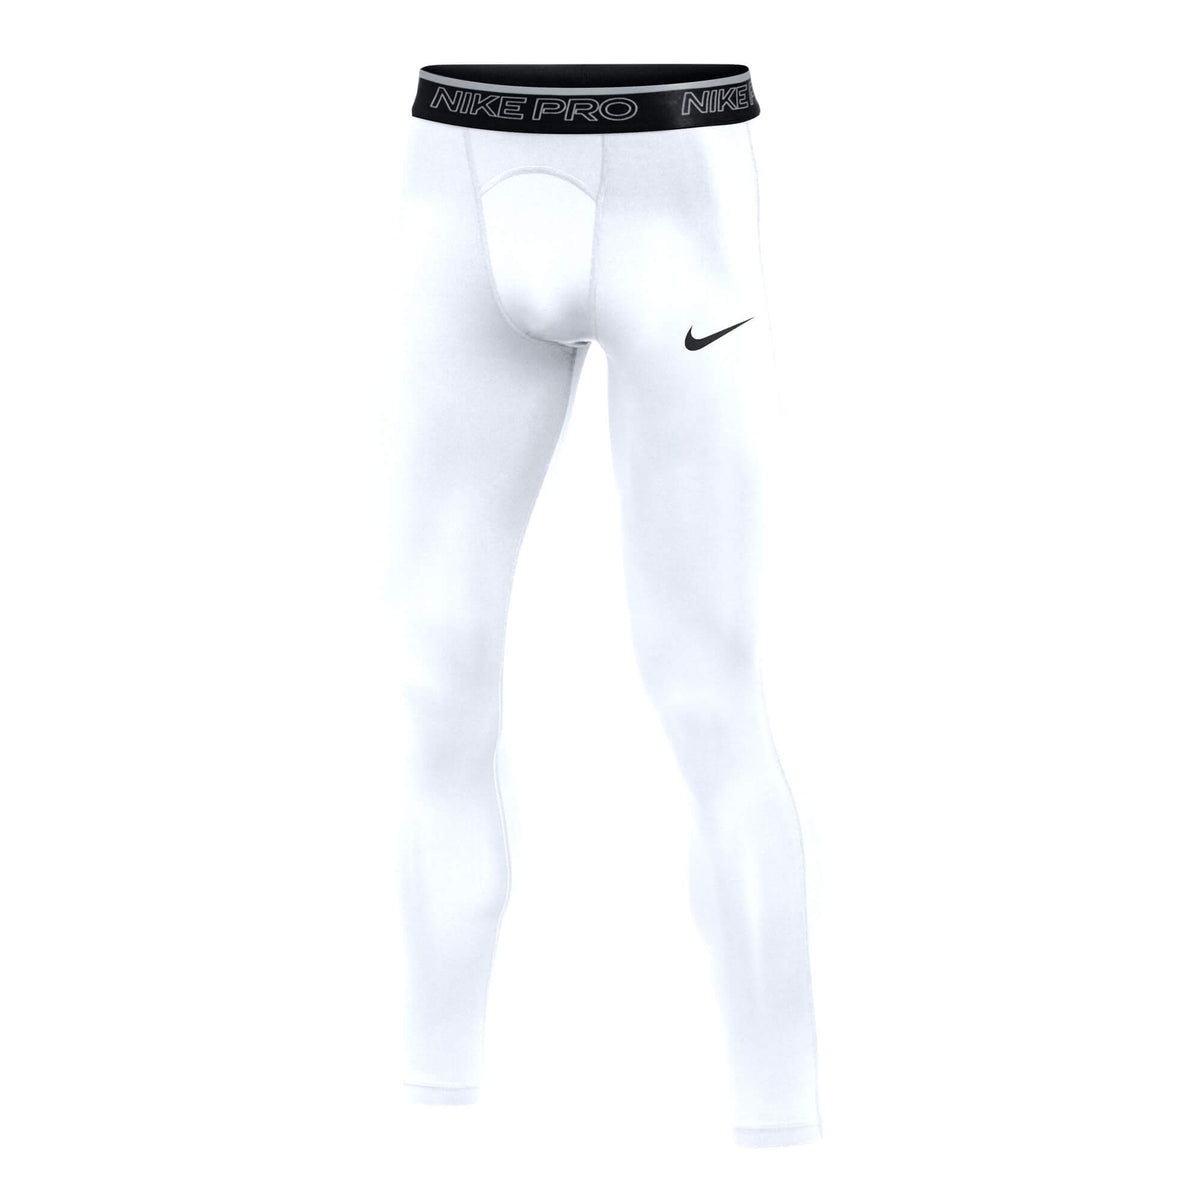 Men's Compression Pants - White